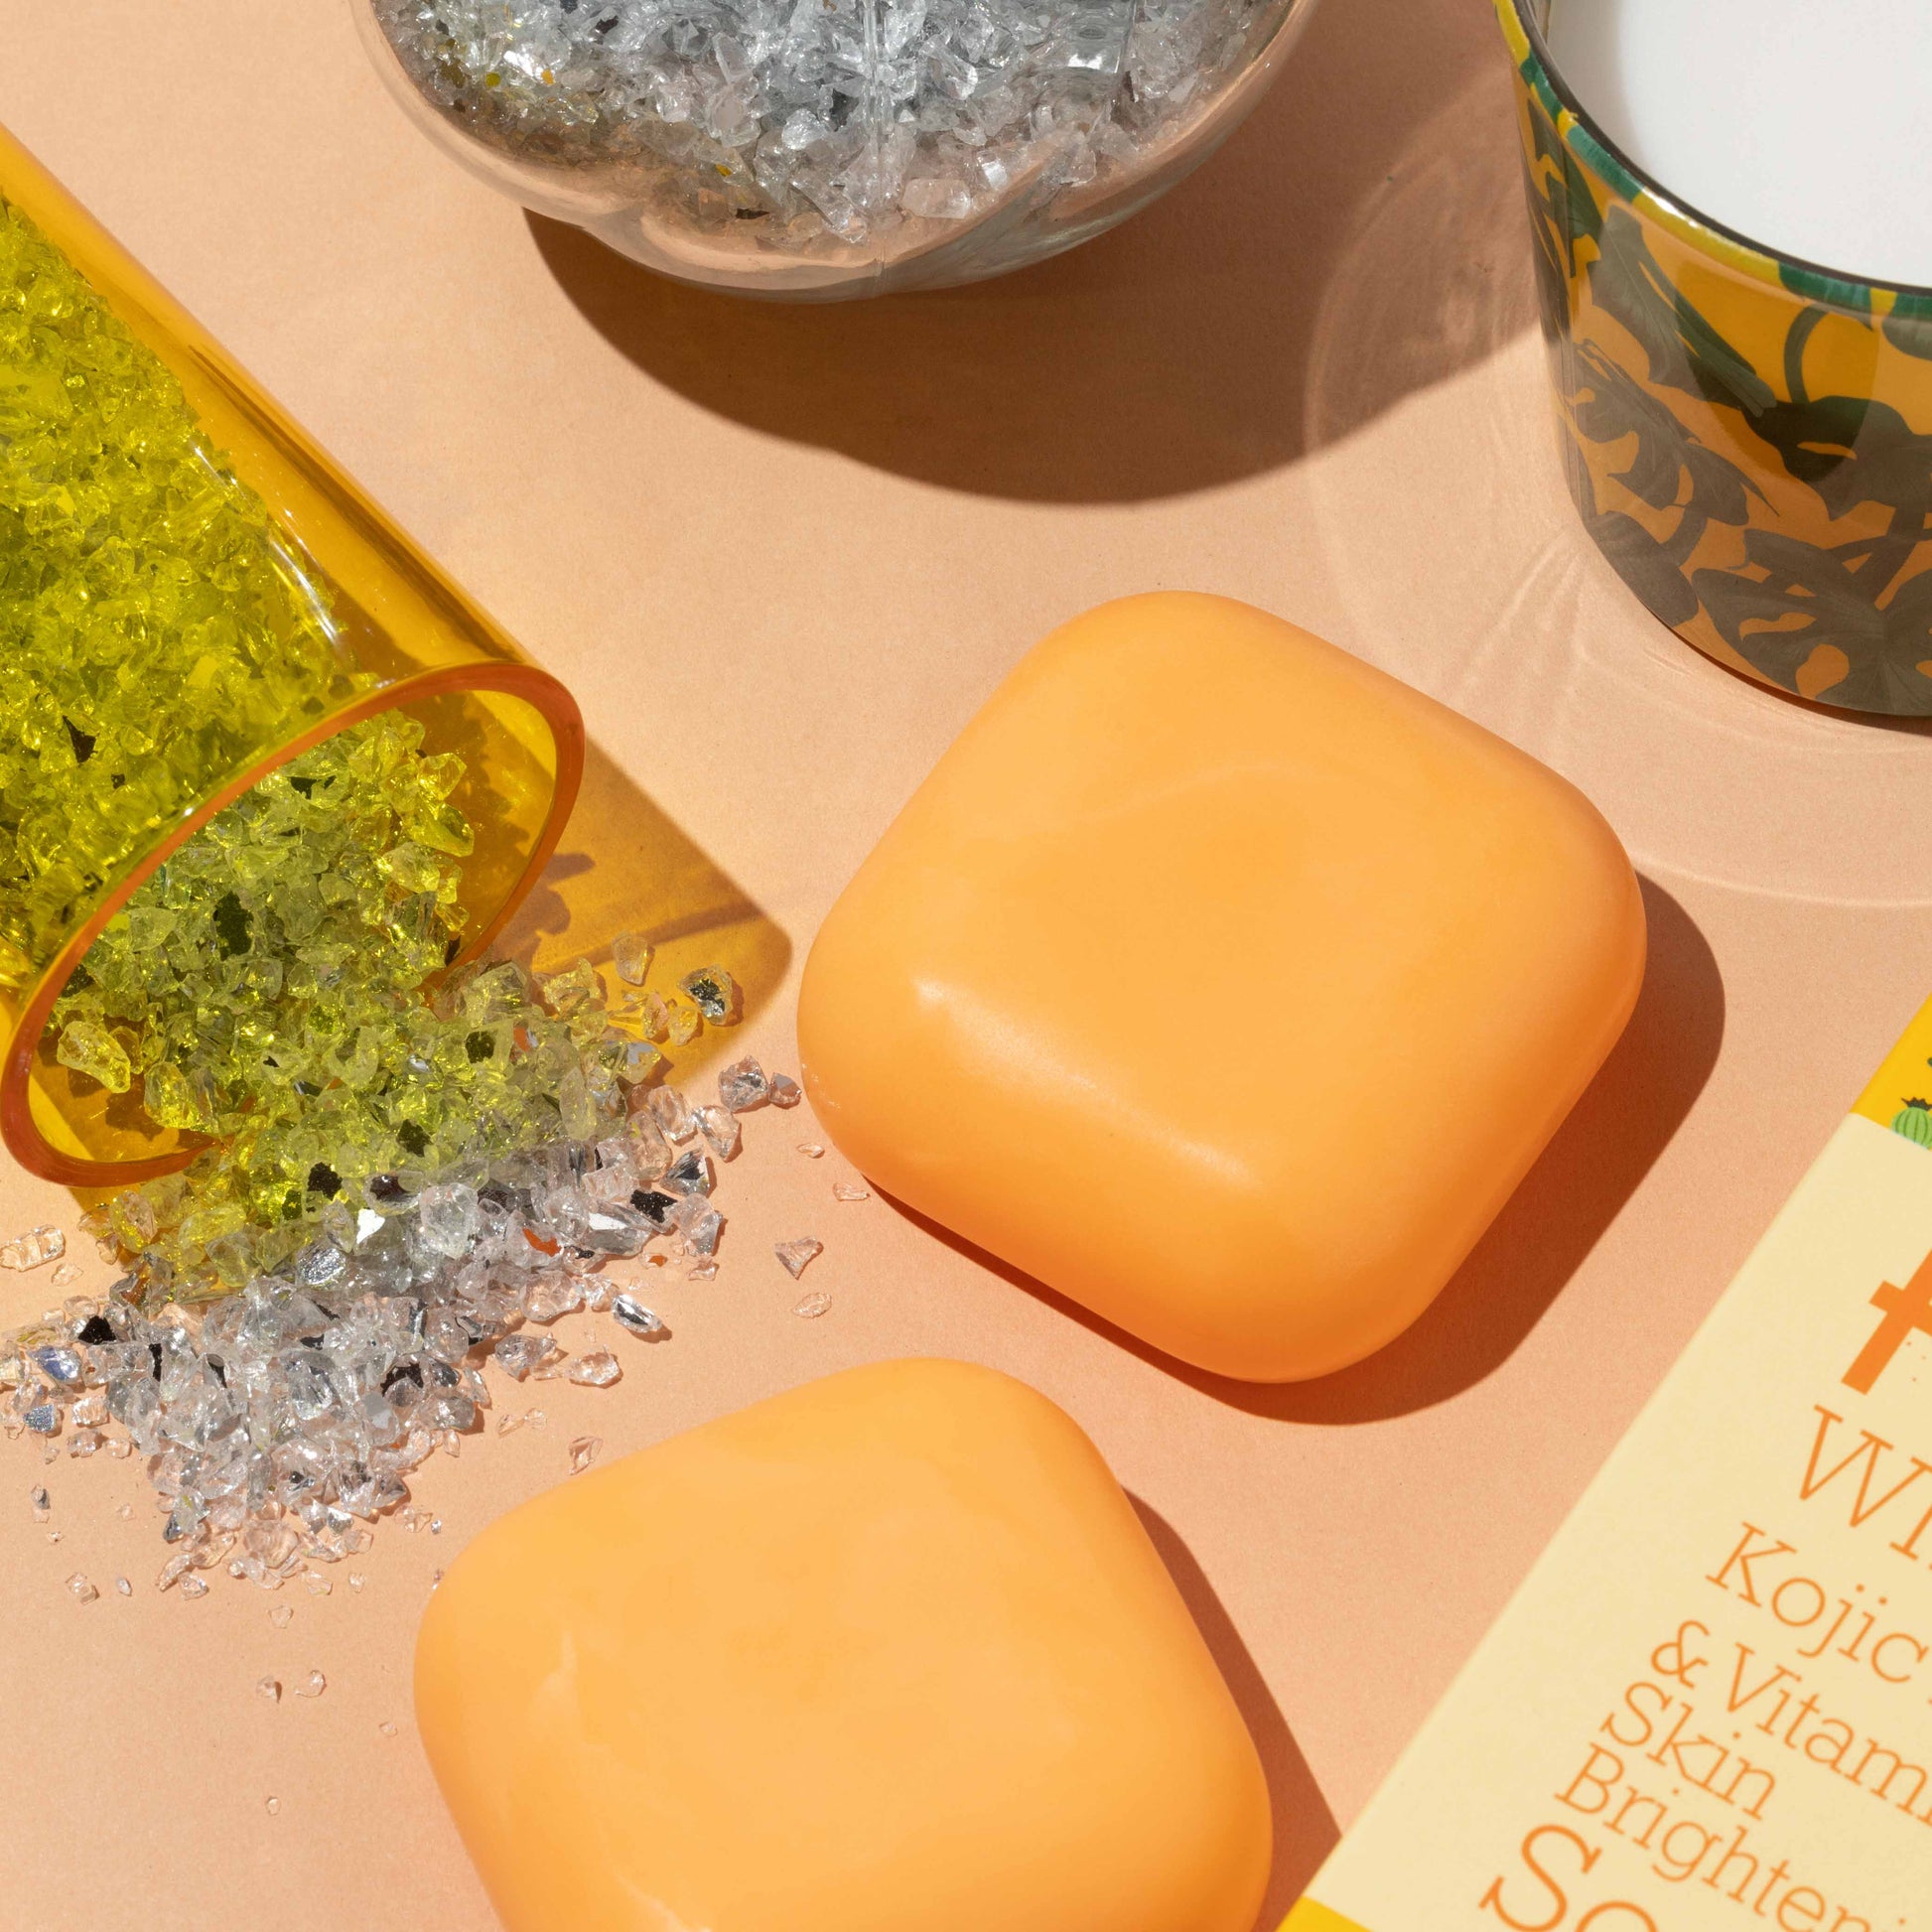 Kojic Acid & Vitamin C Skin Brightening Soap - kojiwhite